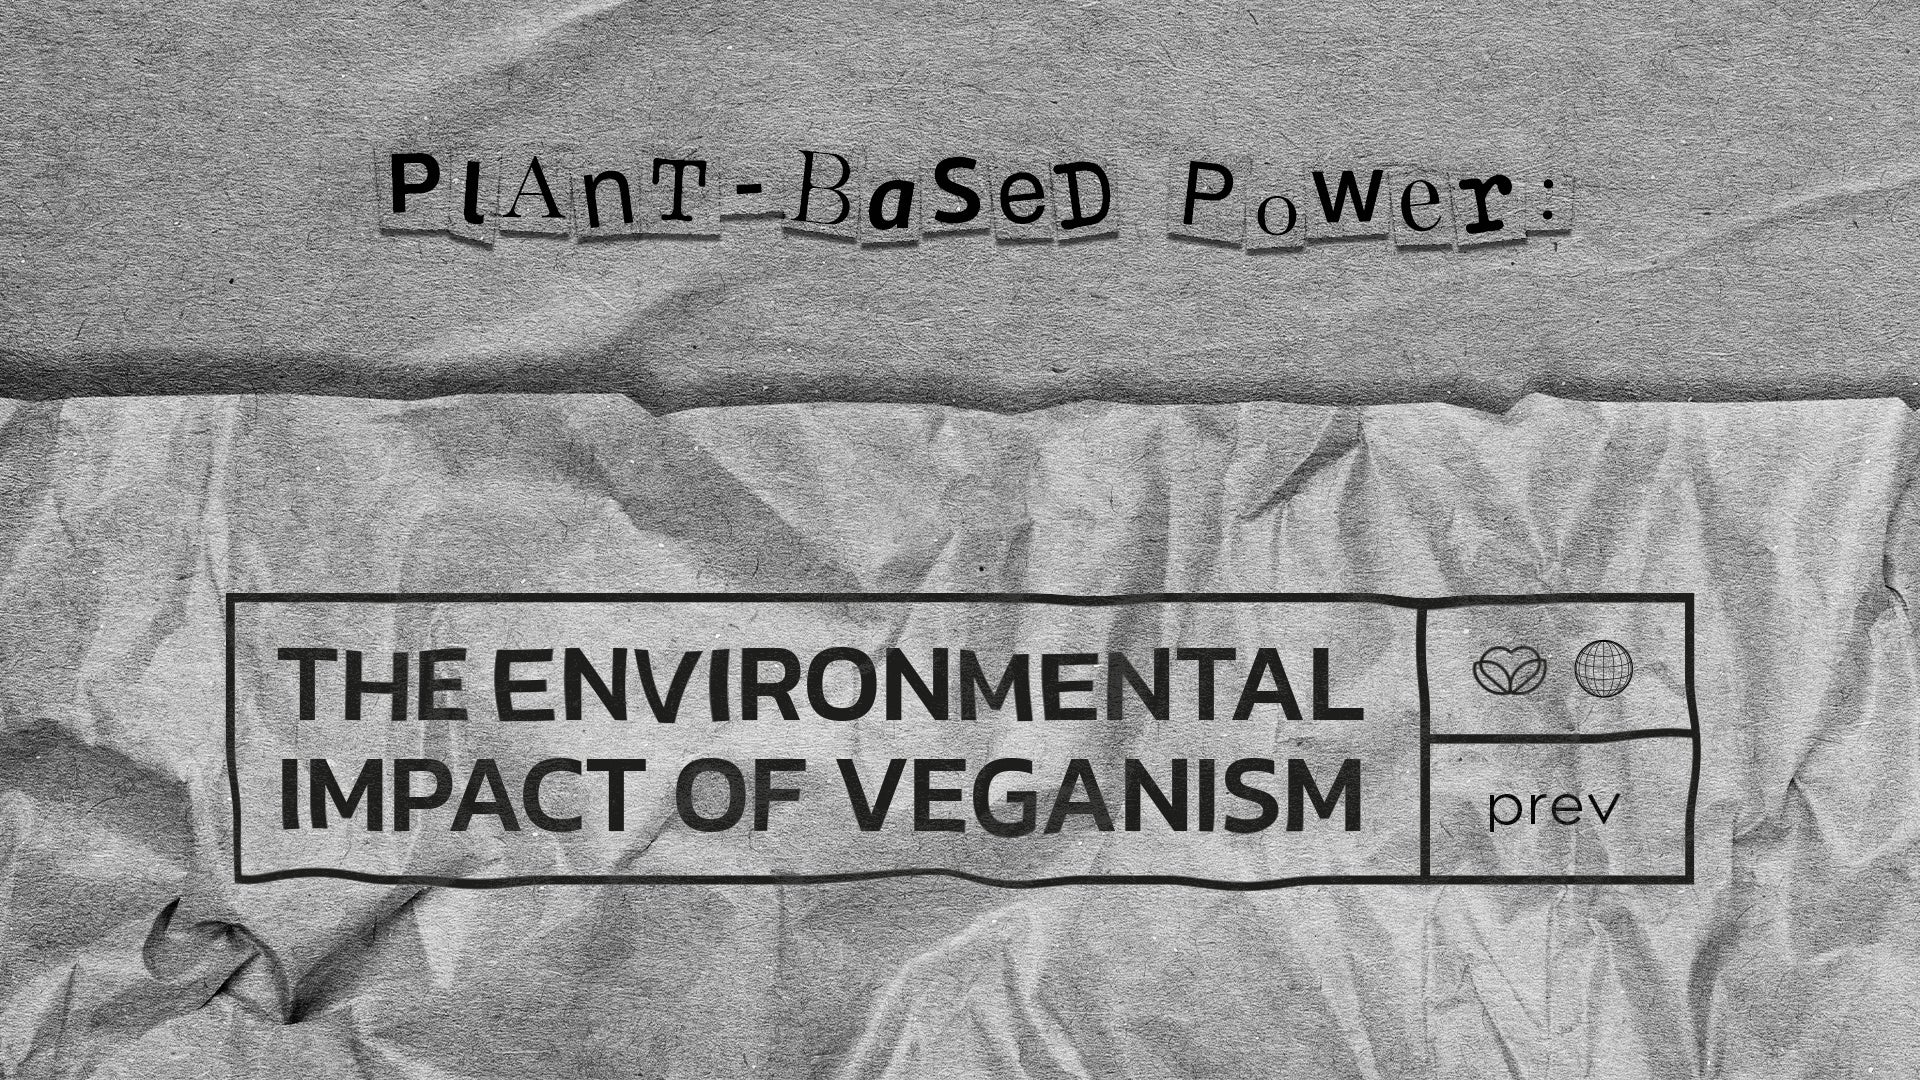 PLANT-BASED POWER: THE ENVIROMENTAL IMPACT OF VEGANISM